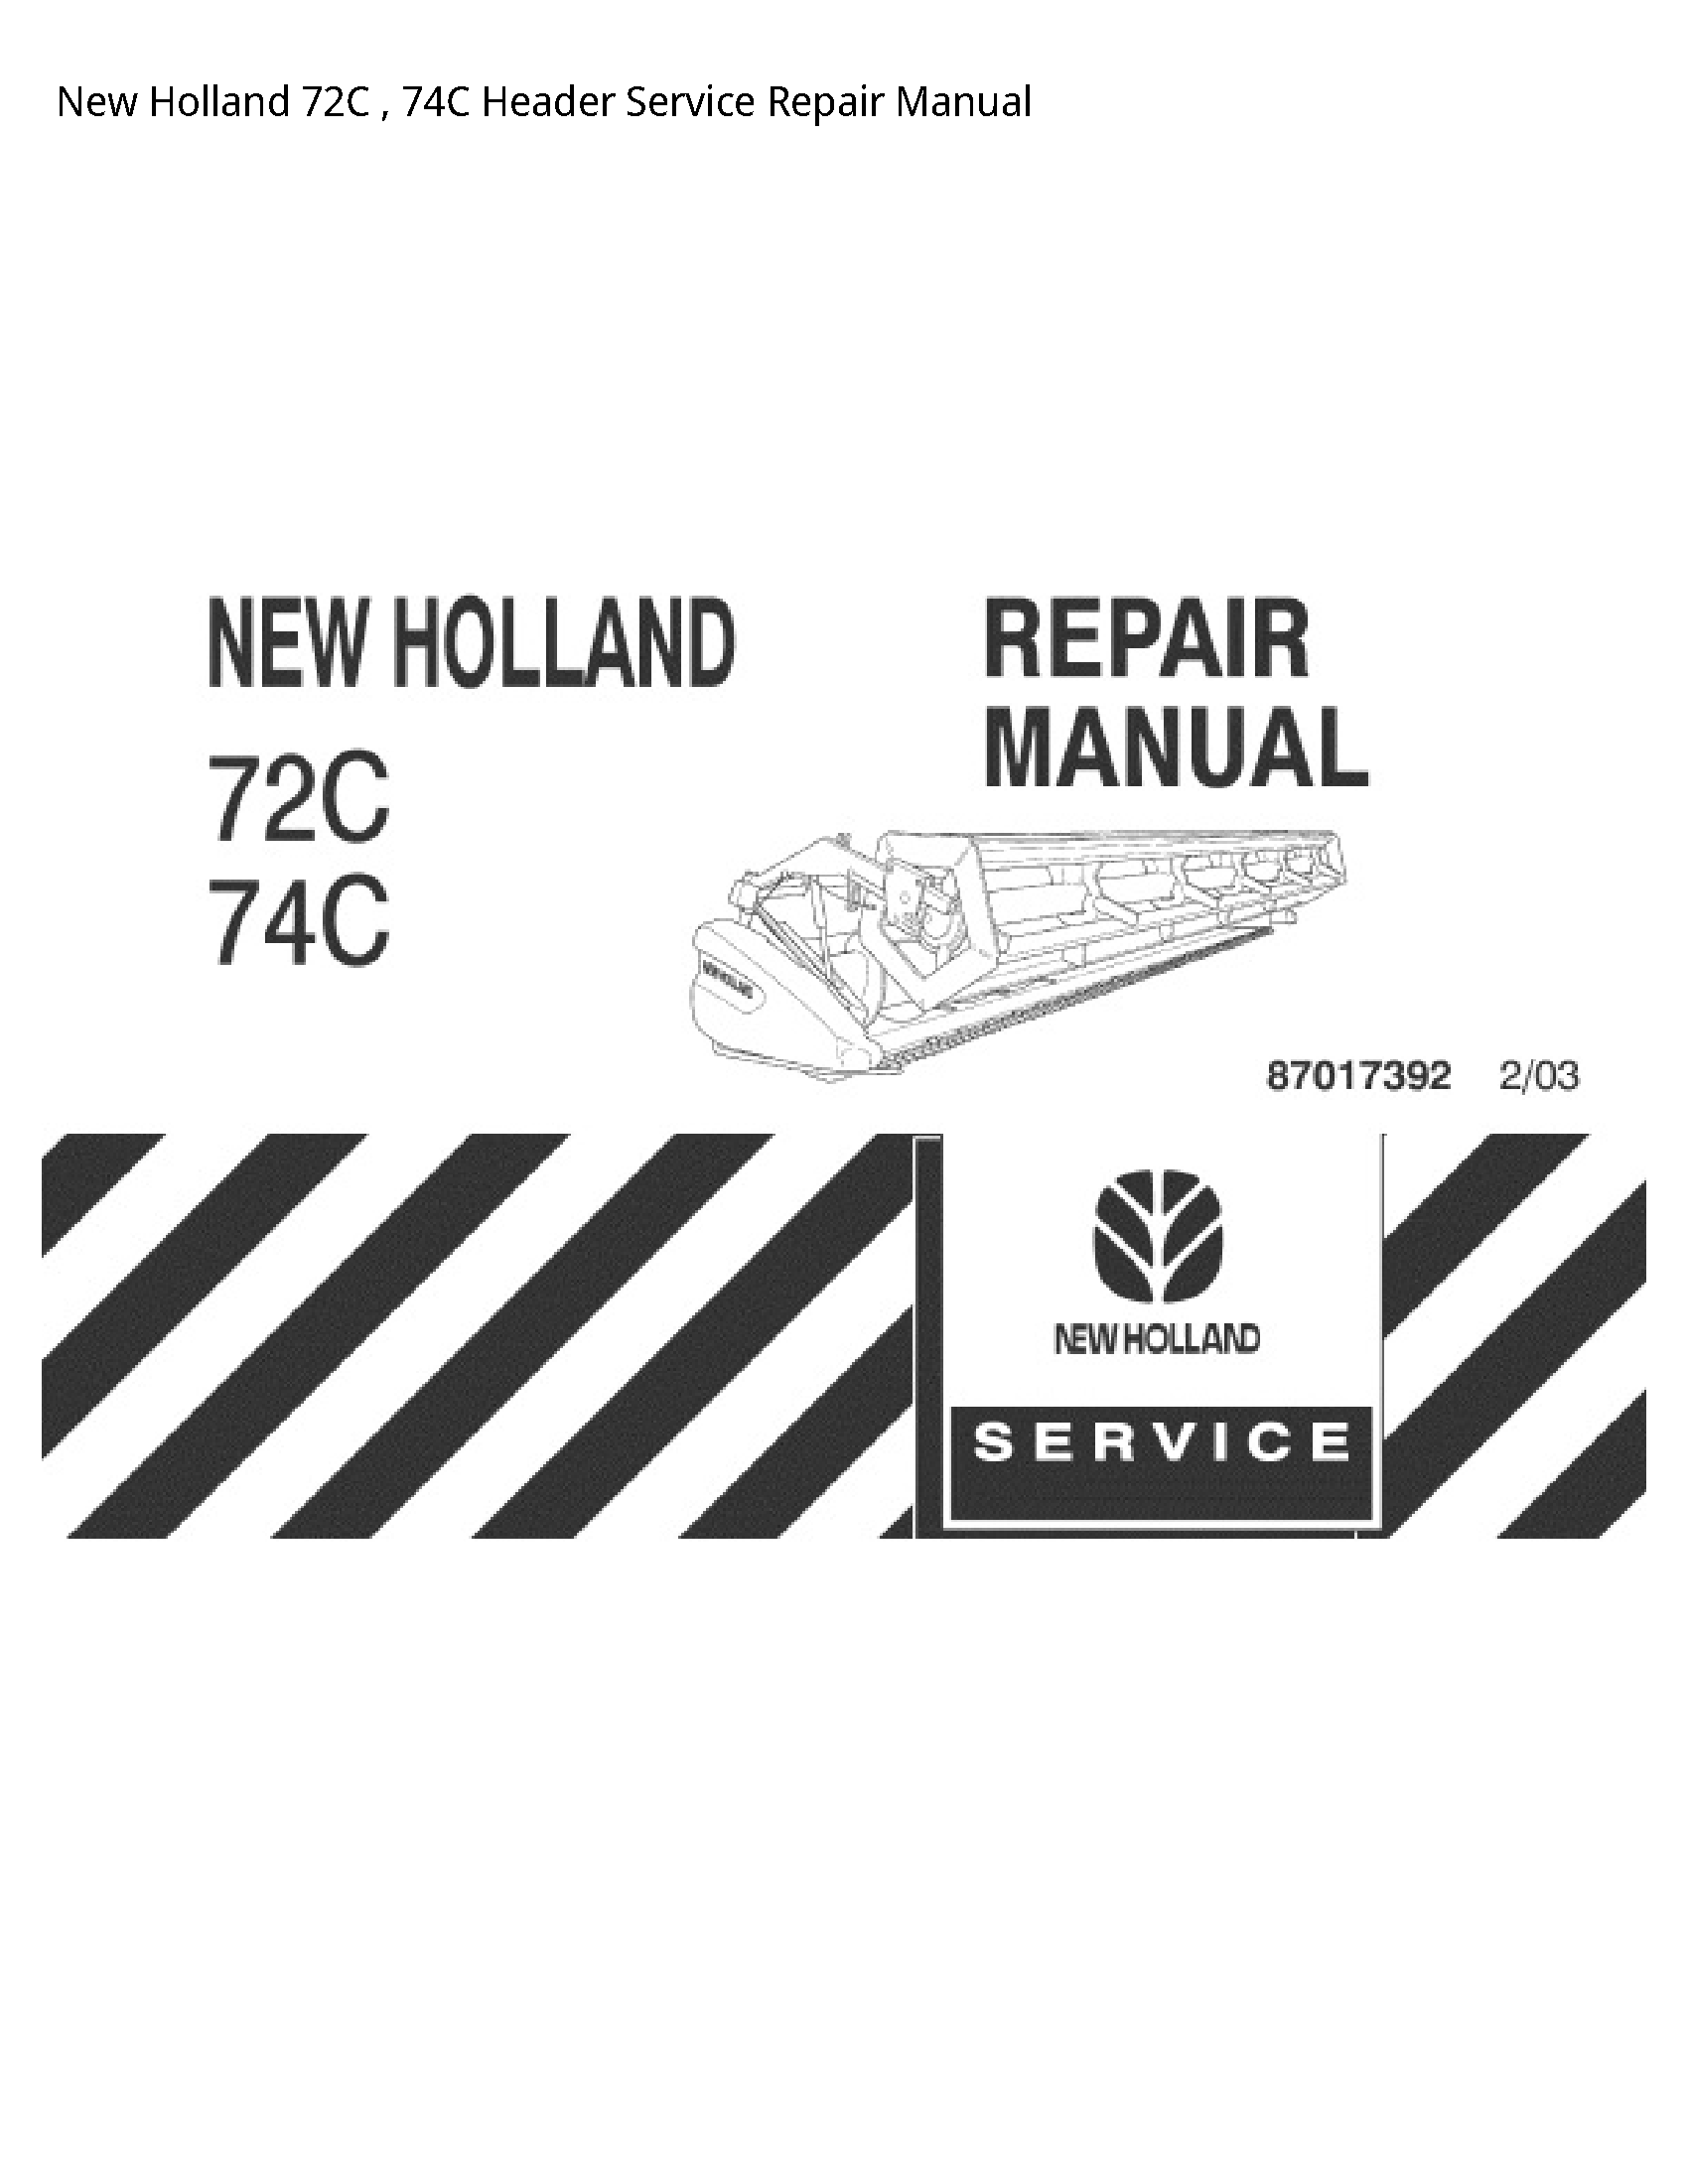 New Holland 72C Header manual